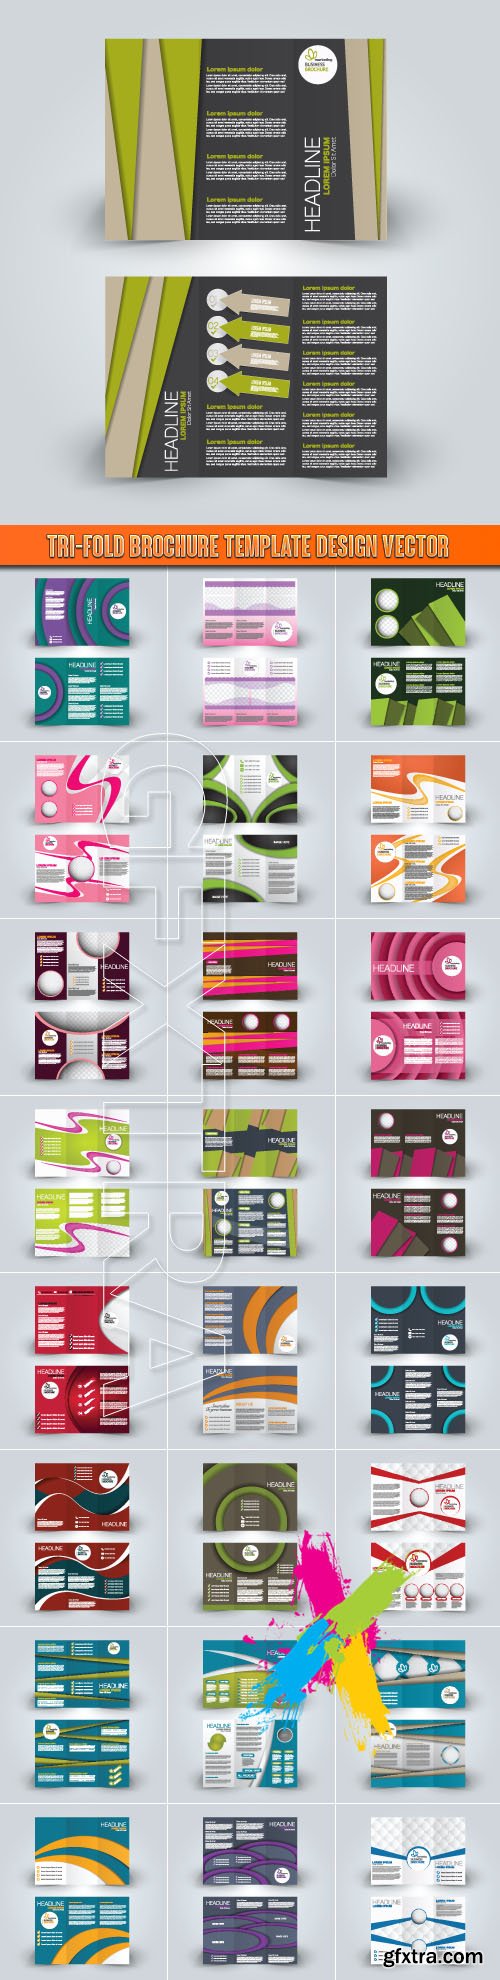 Tri-fold Brochure template design vector